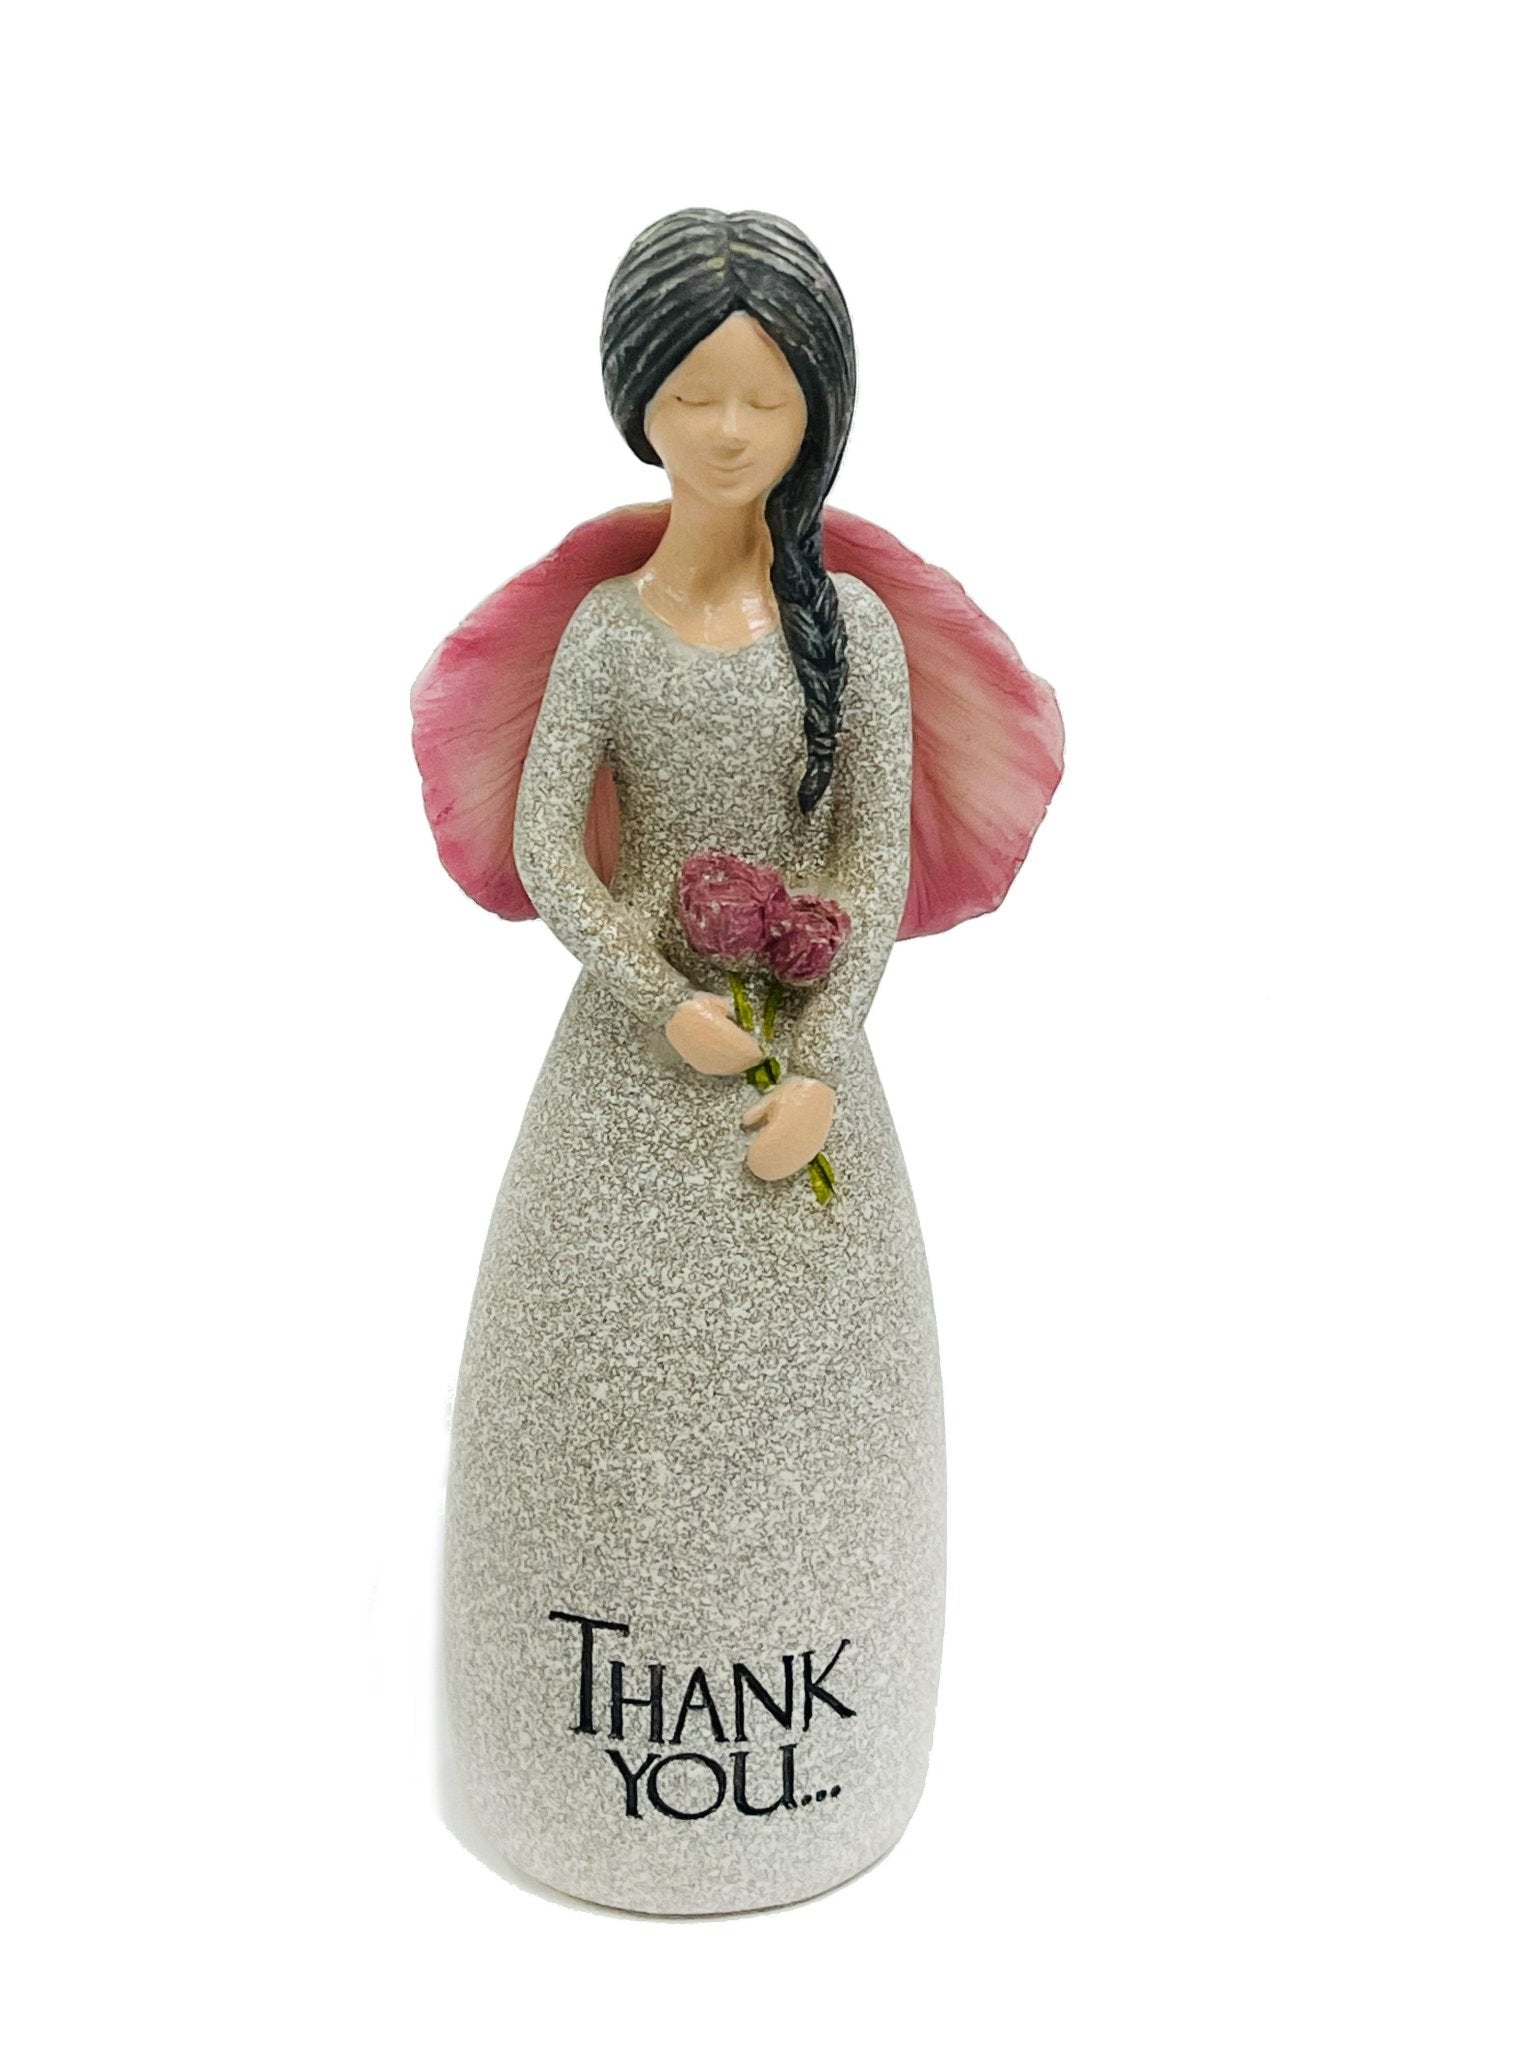 Thank You Angel Small Figurine - Celebrate Prints